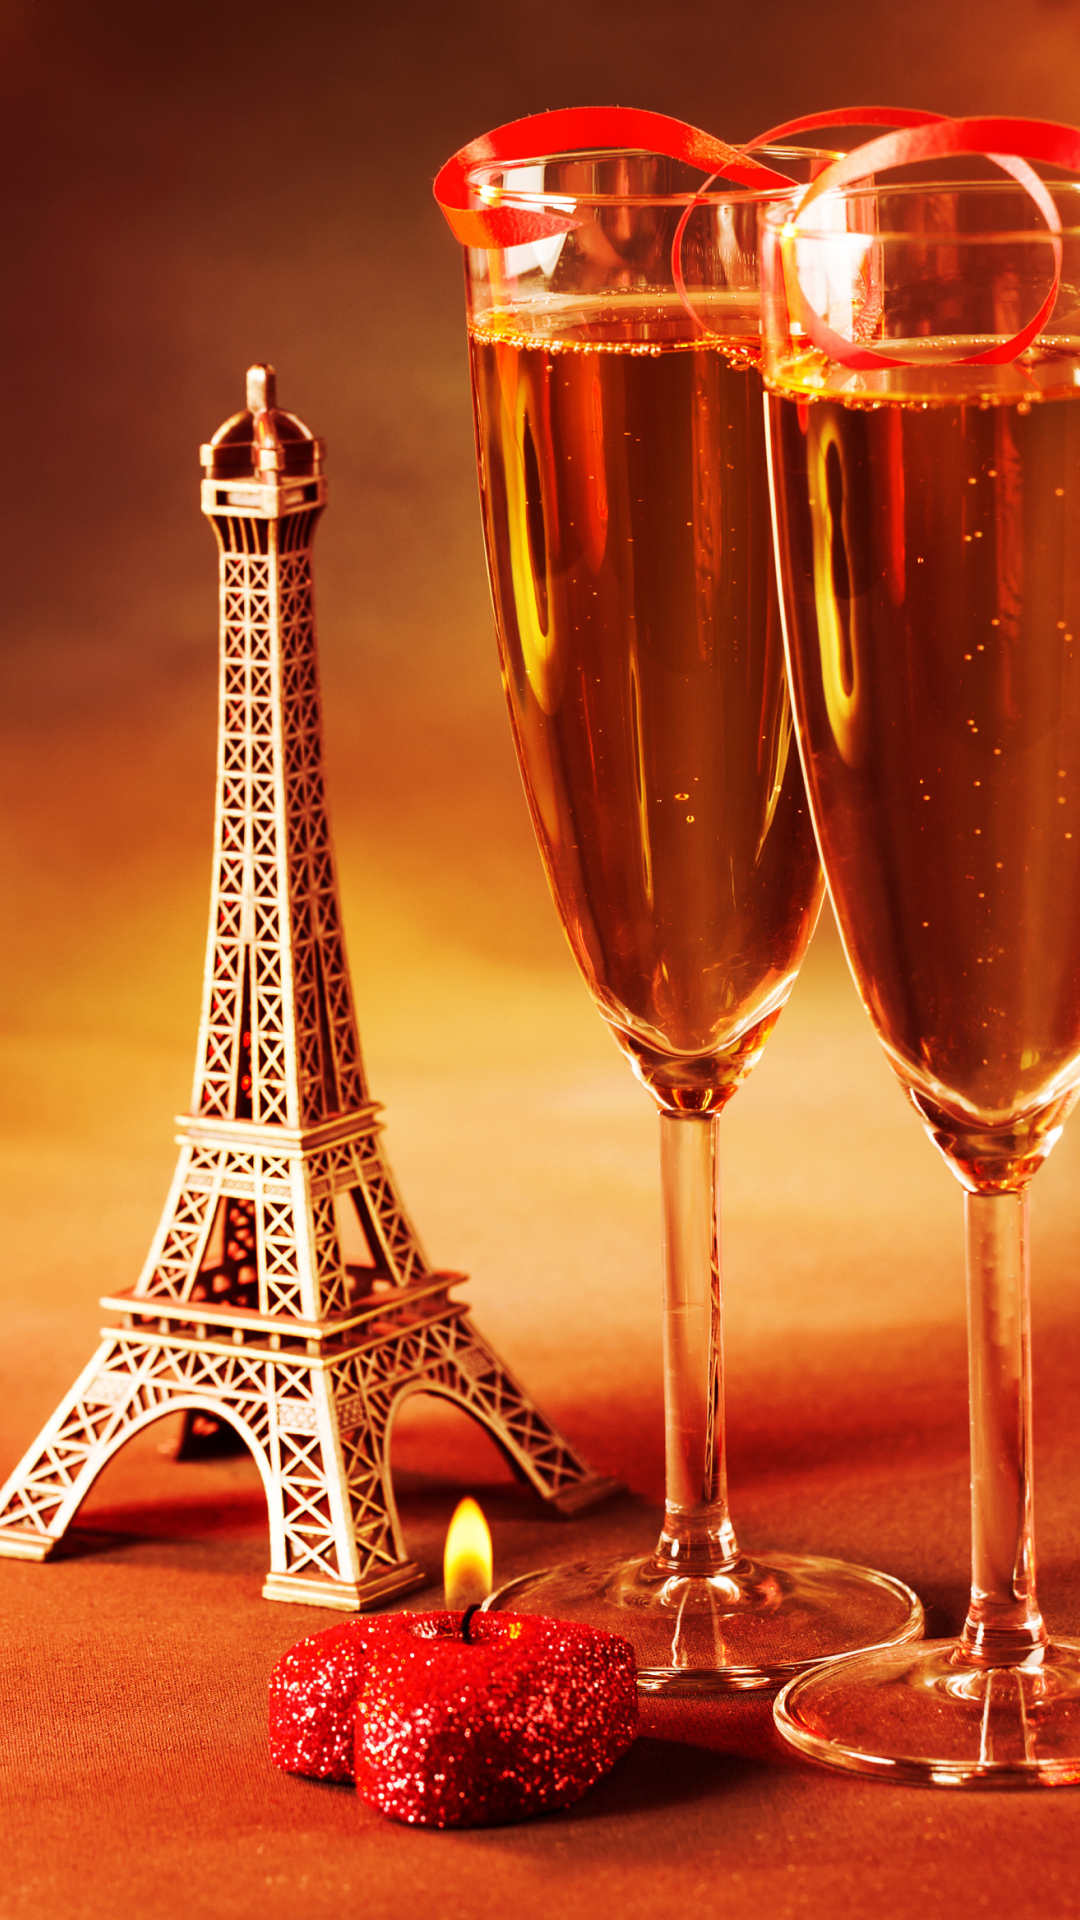 Paris Mini Eiffel Tower And Champagne wallpaper 1080x1920